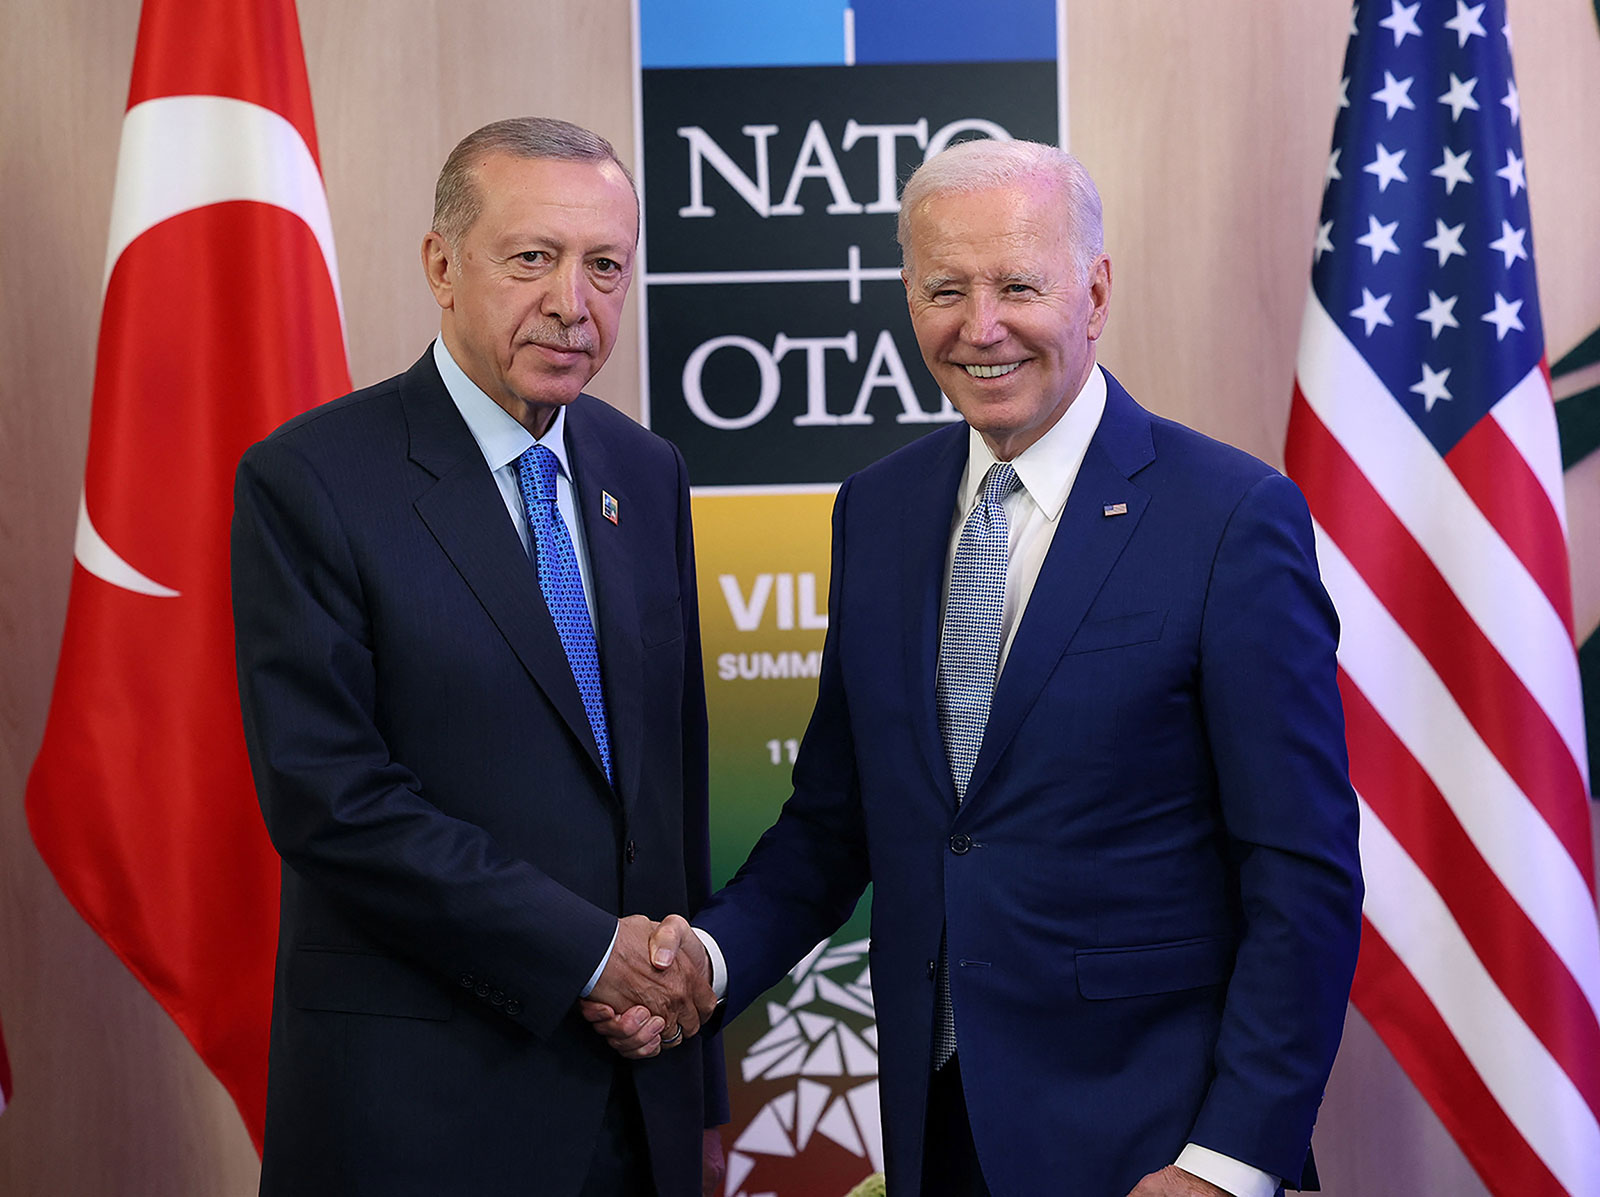 Turkish President Recep Tayyip Erdogan and US President Joe Biden shake hands during a NATO leaders summit in Vilnius, Lithuania July 11.